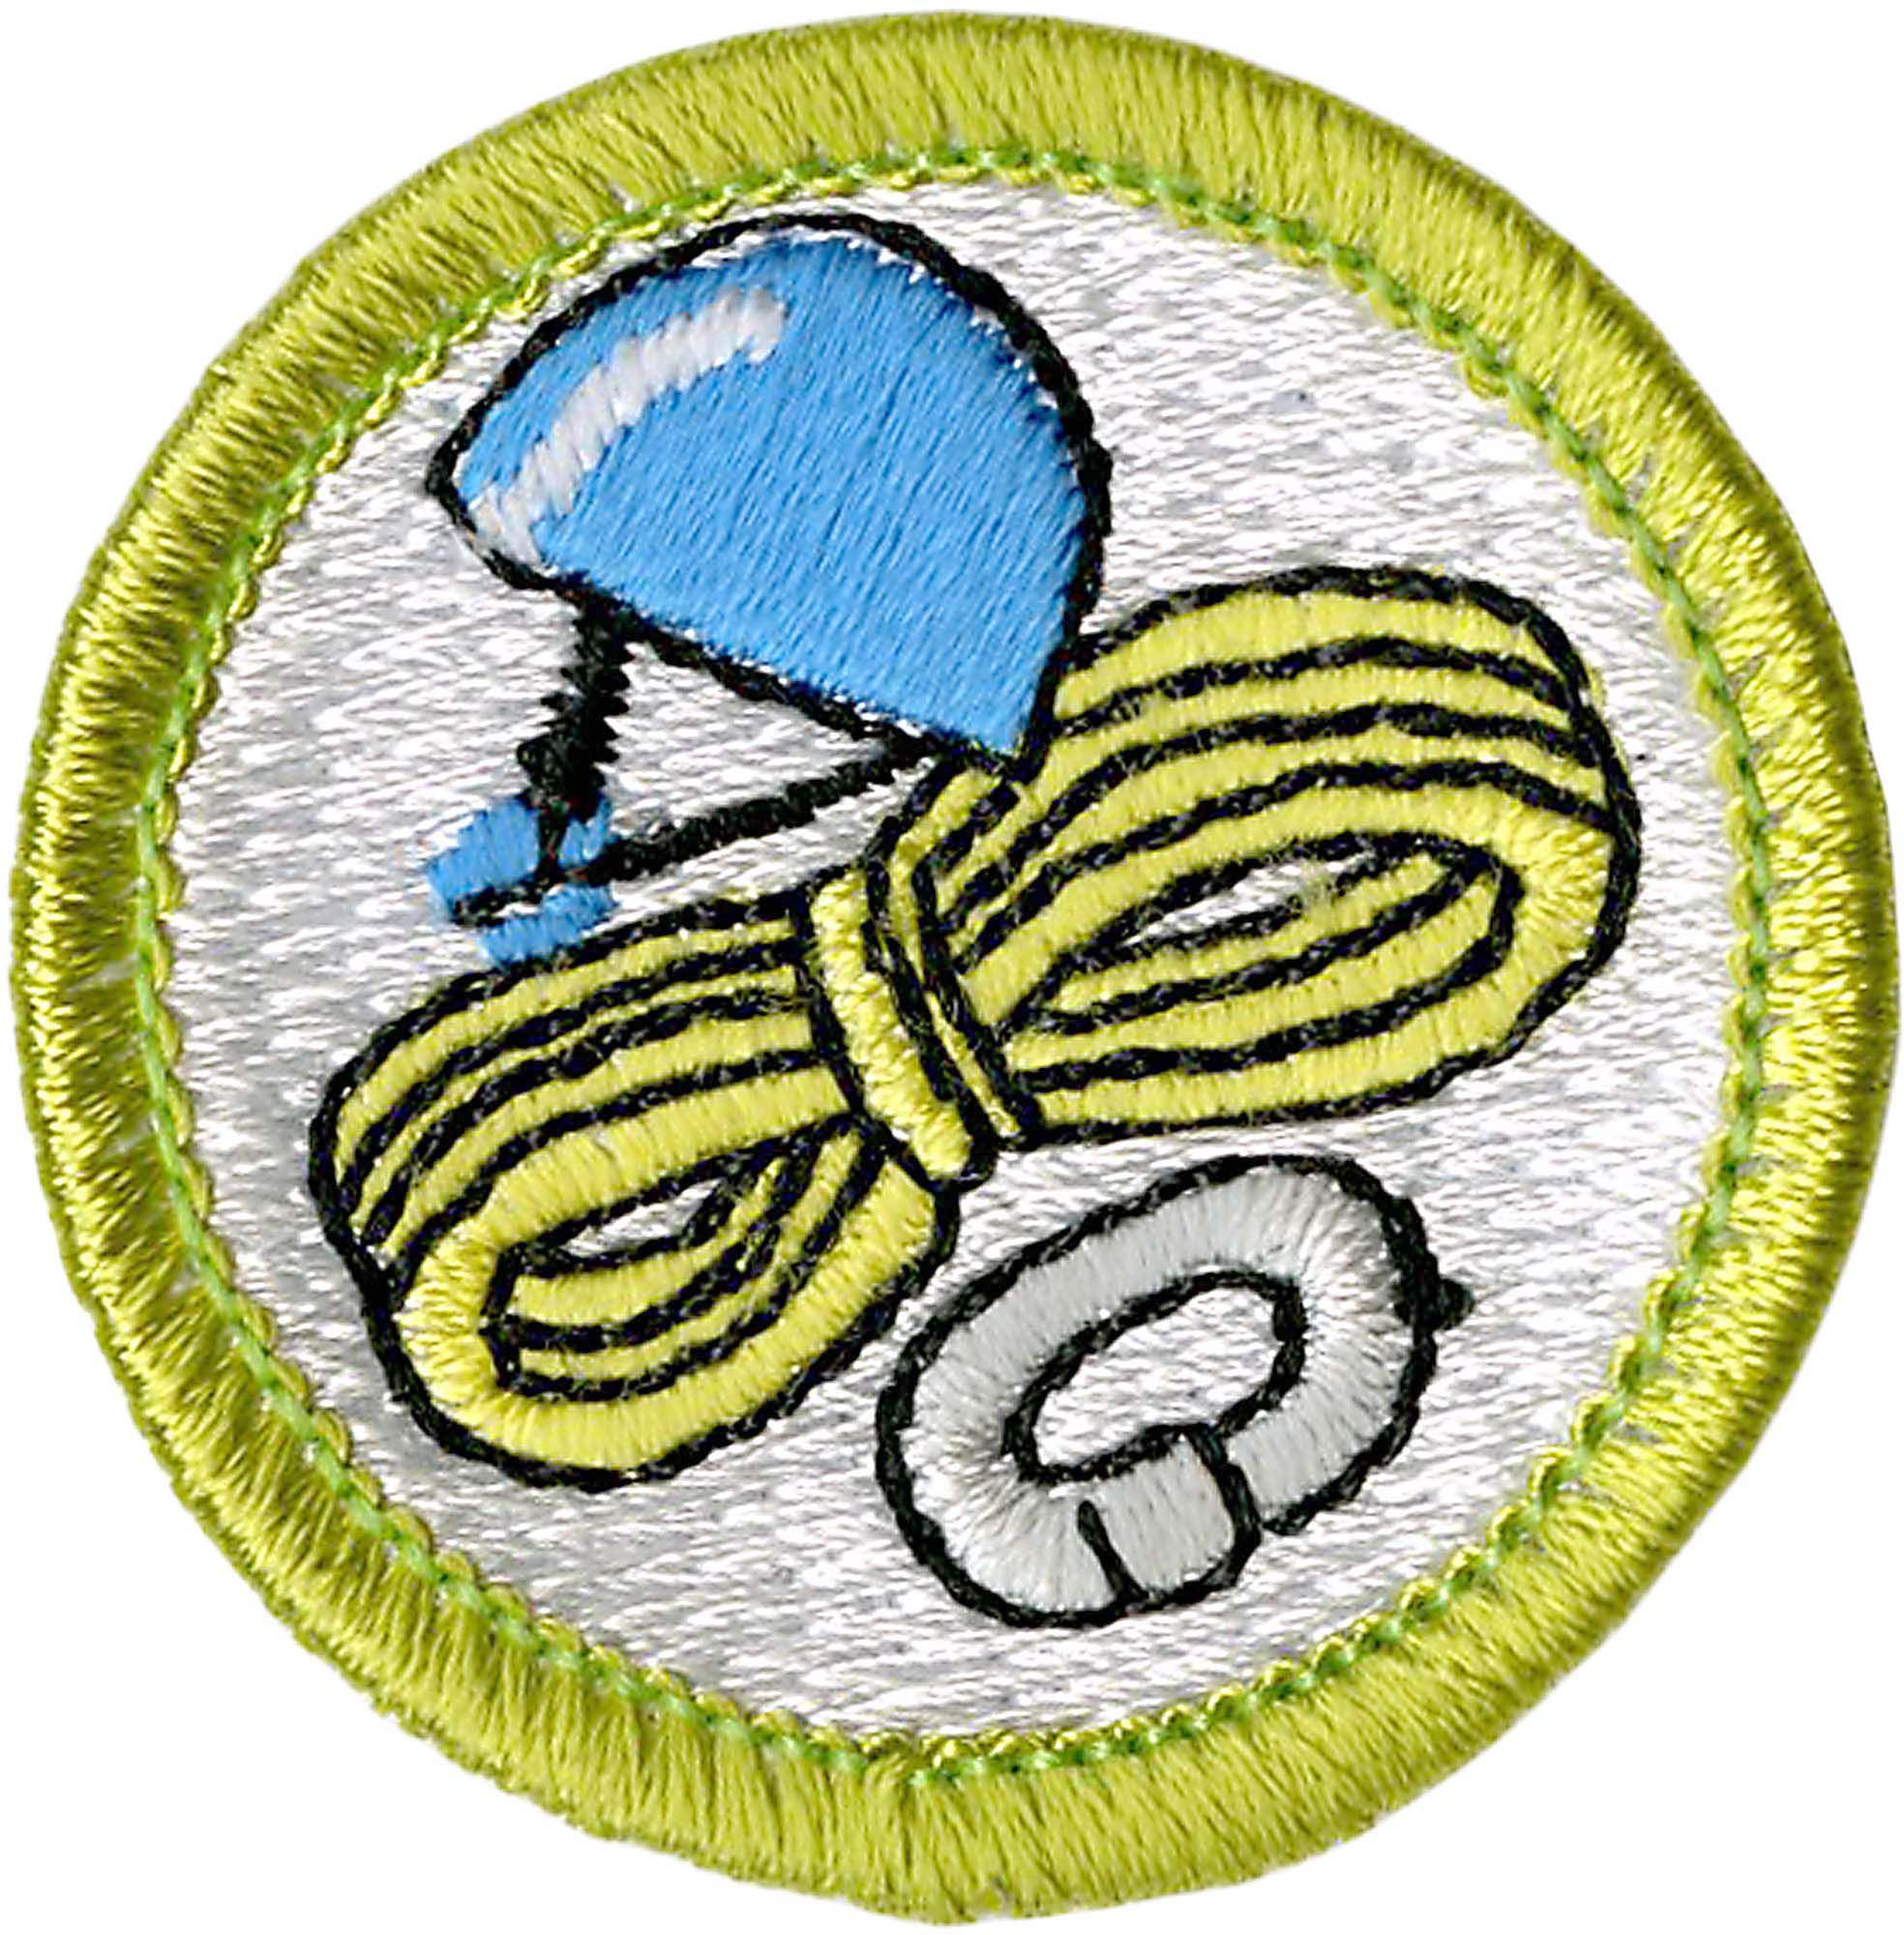 rU BSA 2010 backed CLIMBING merit badge emblem patch